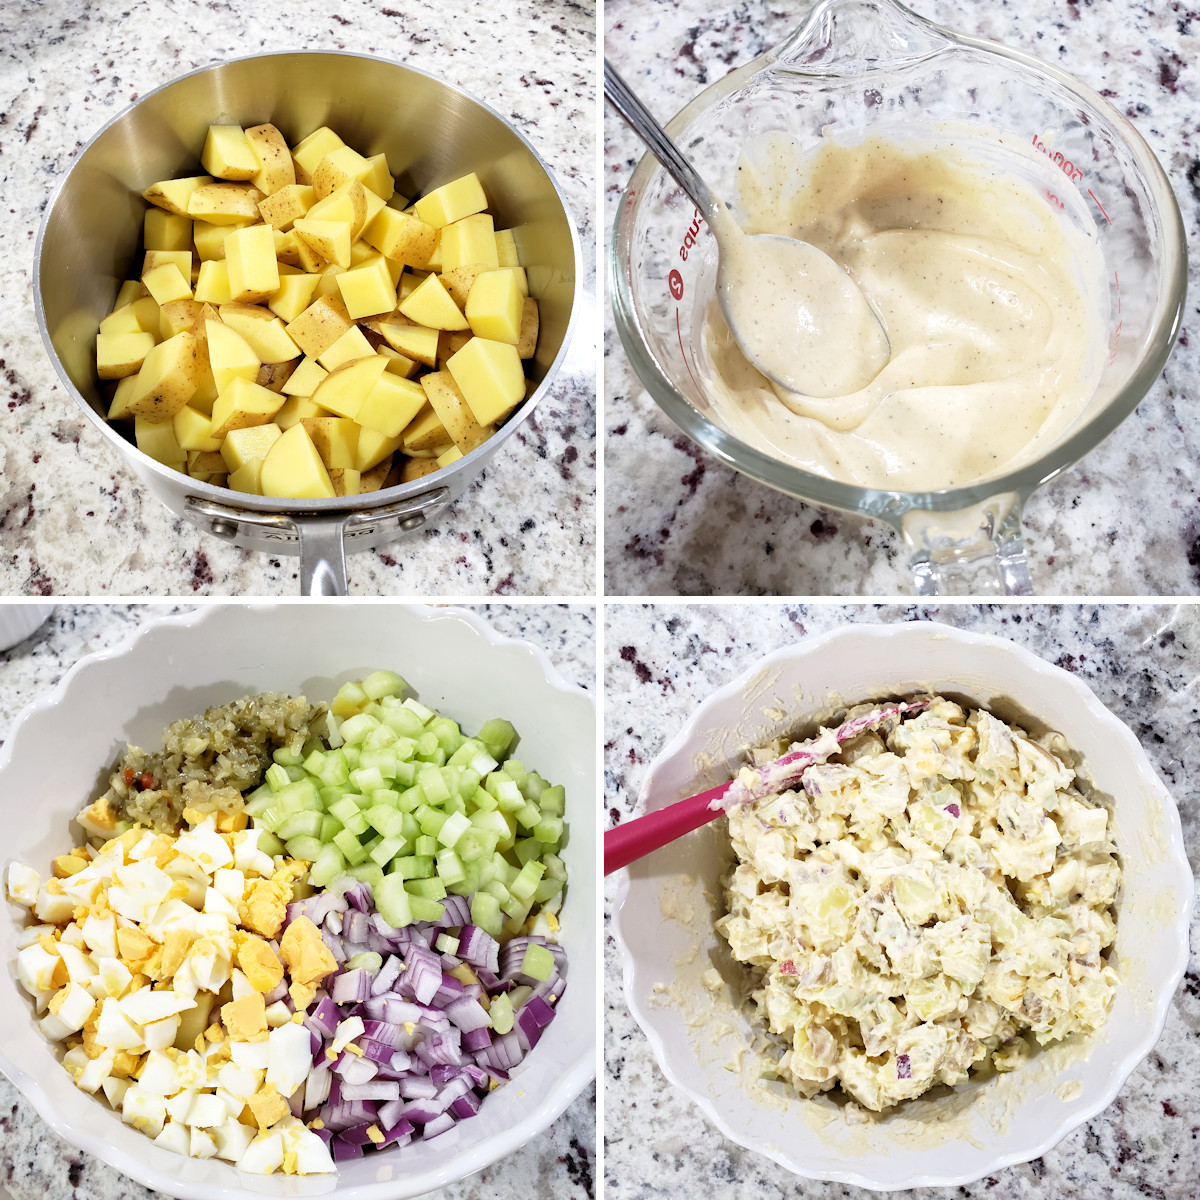 Assembling a potato salad in a mixing bowl.